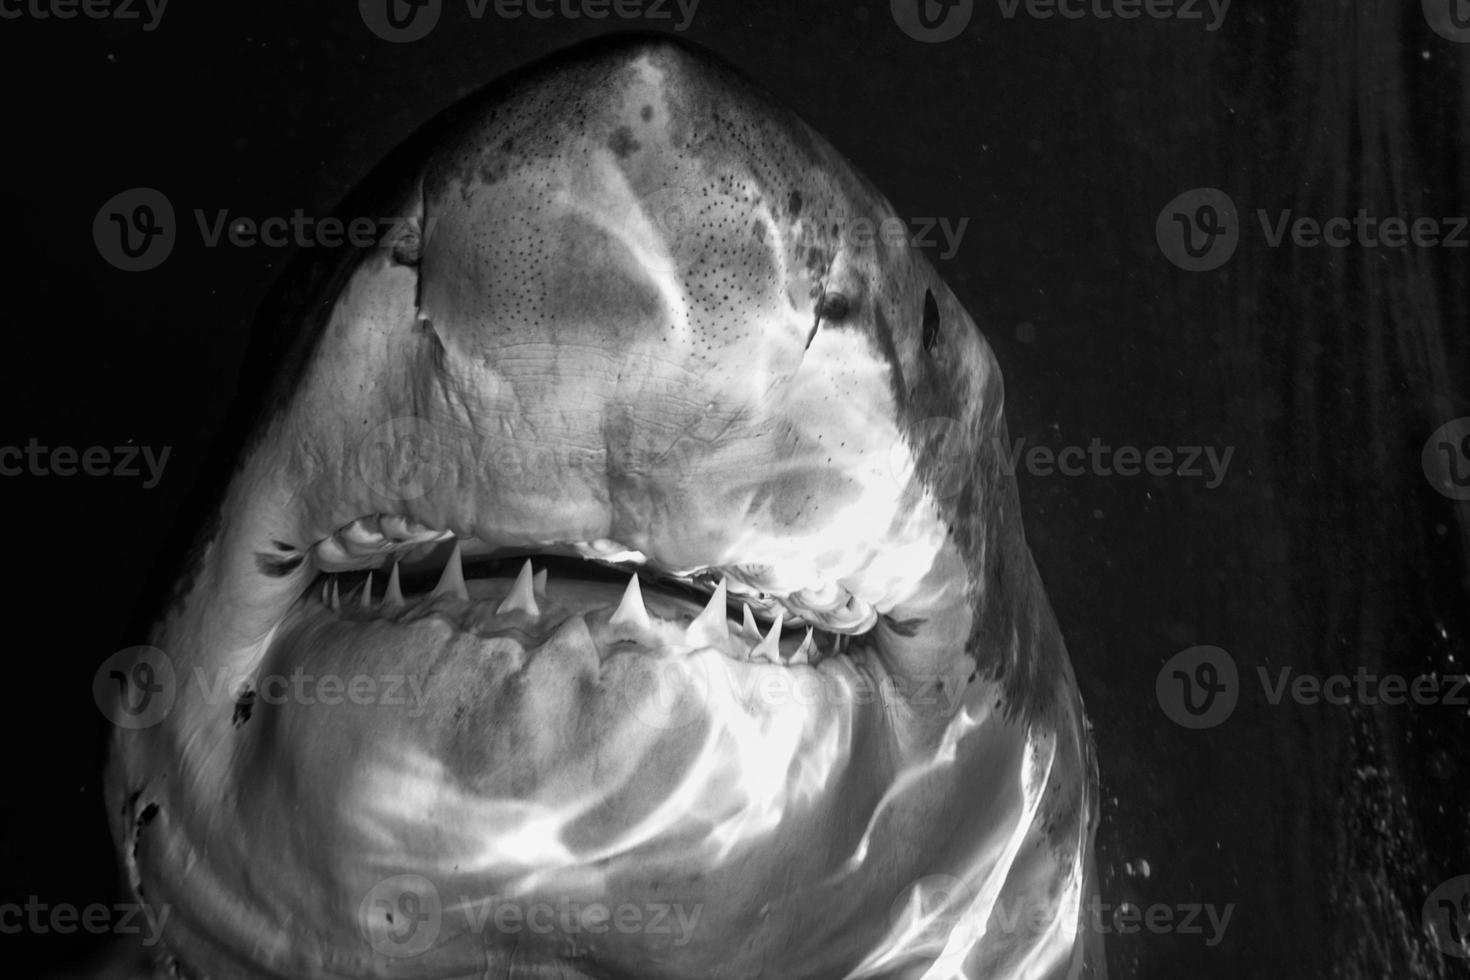 gran ataque de tiburon blanco foto